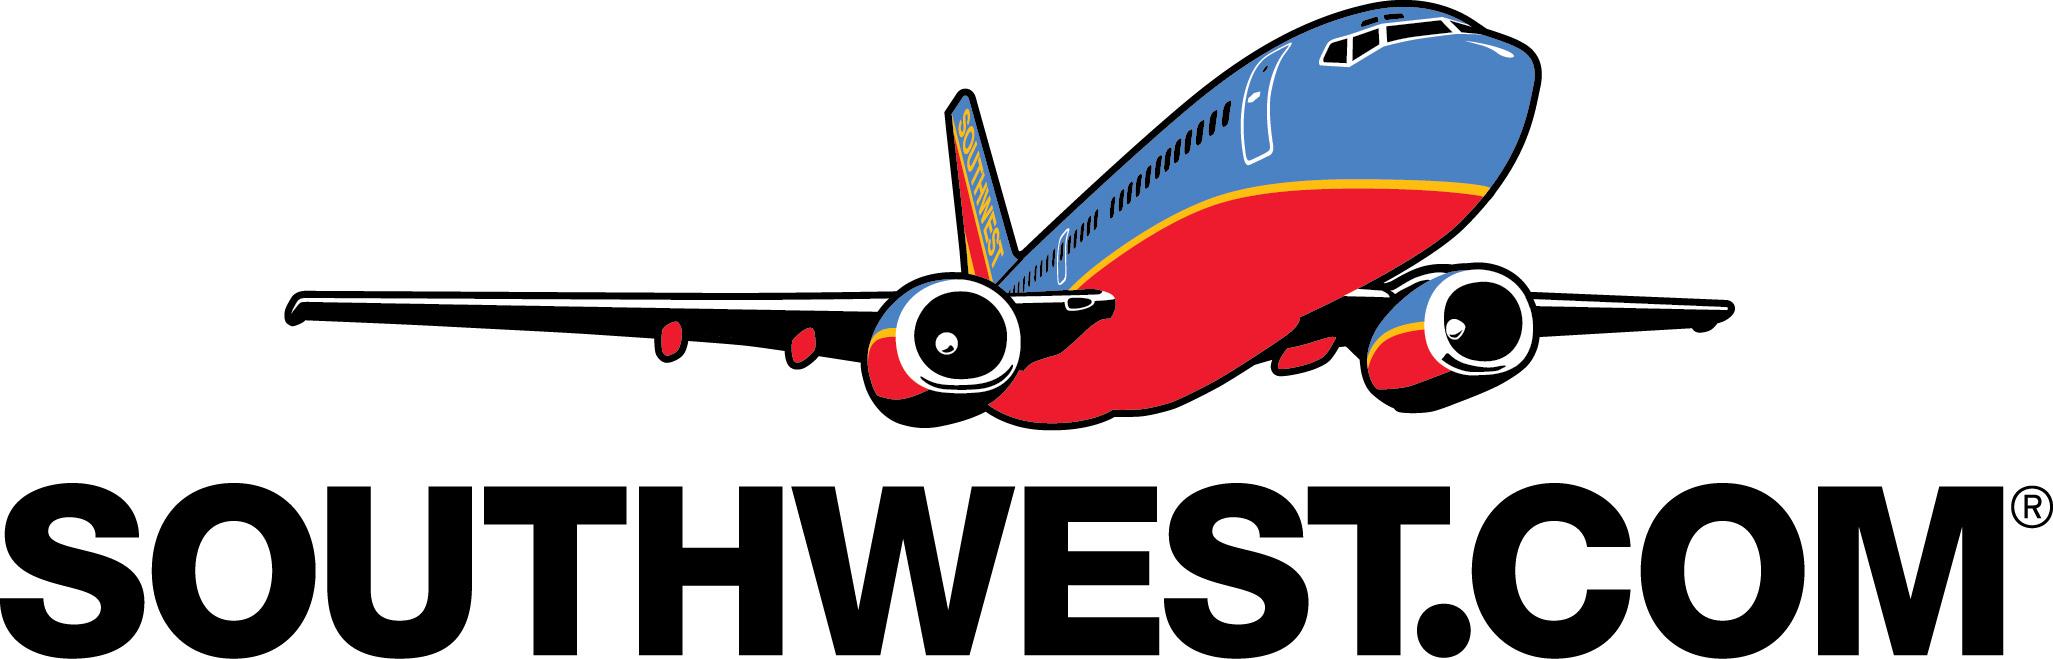 Southwest Company Logo - southwest.com Takeoff Logo